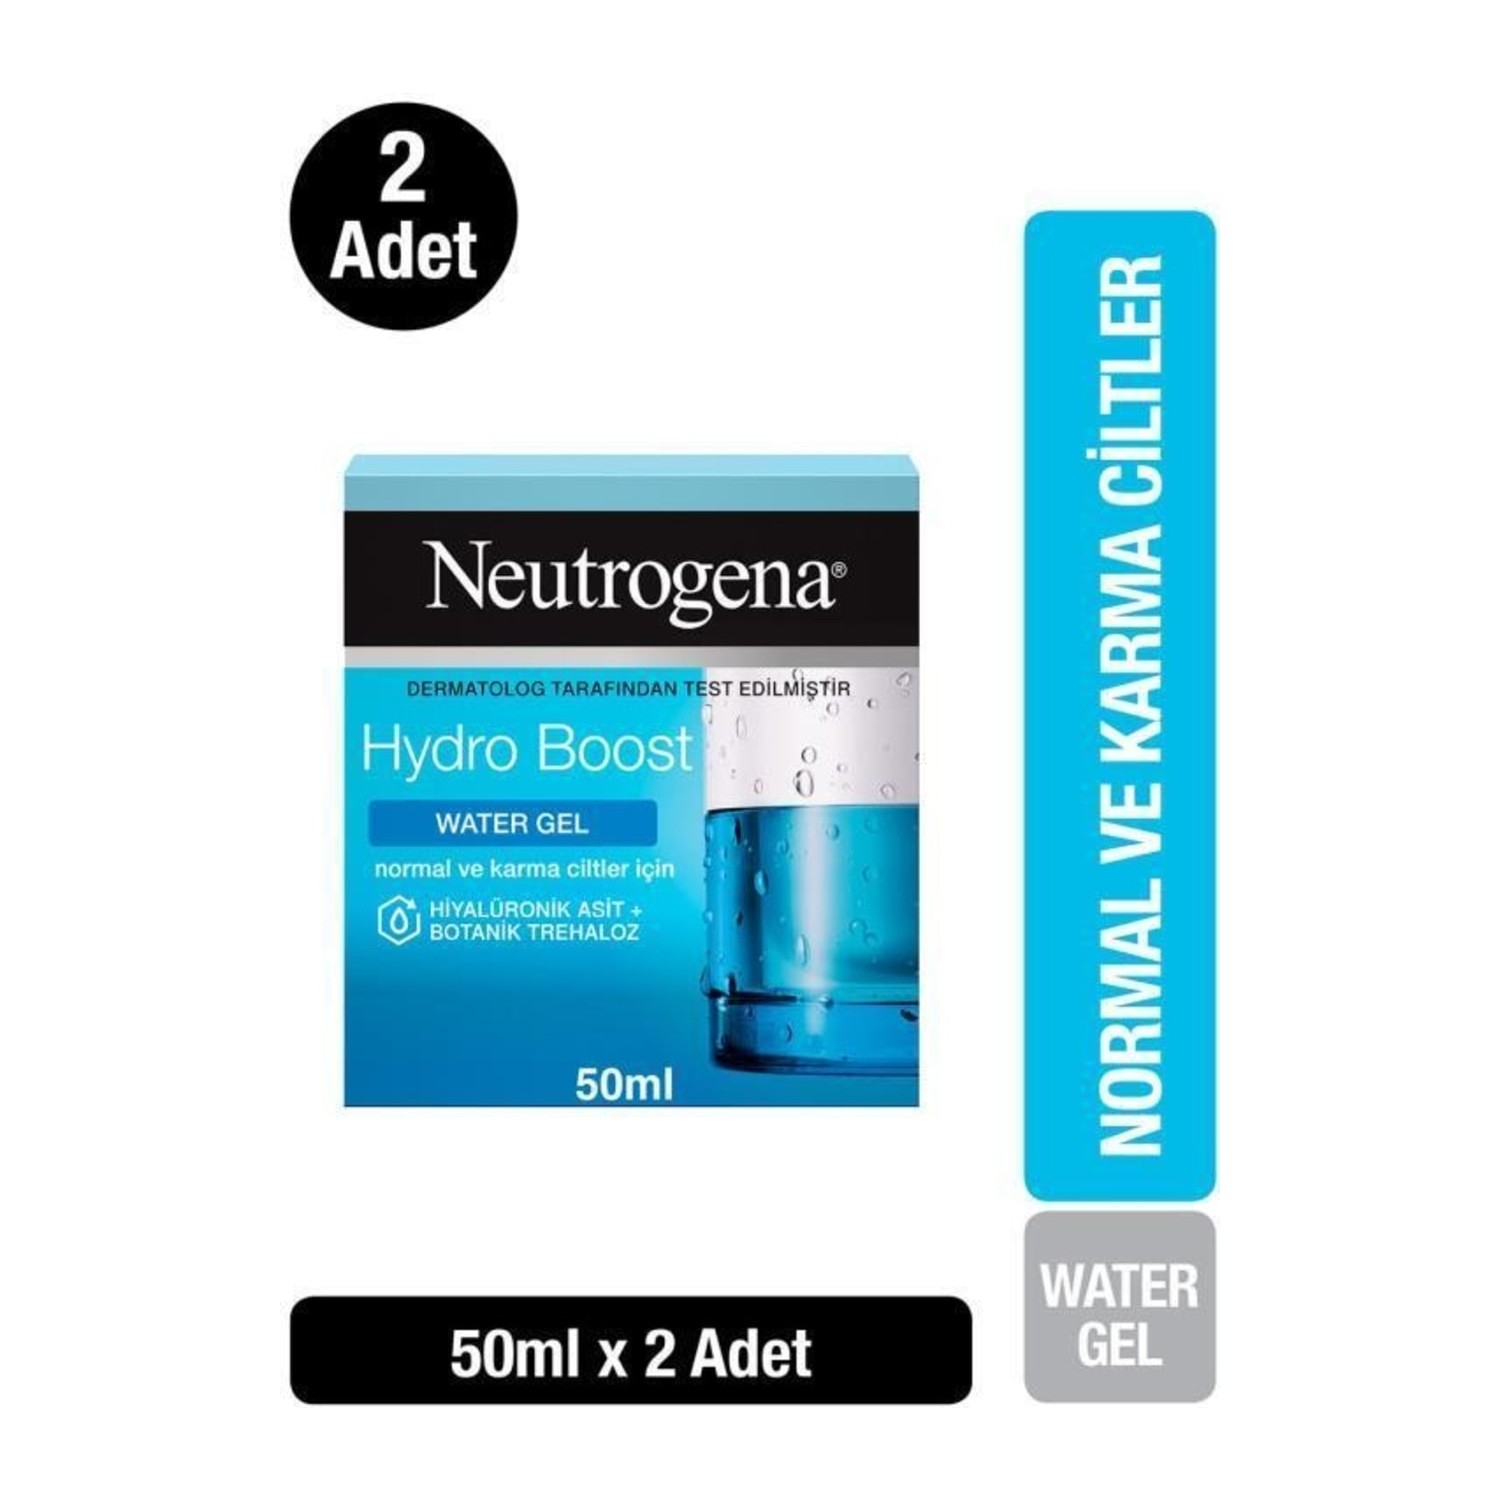 Крем увлажняющий Neutrogena Hydro Boost Water Gel для нормальной кожи, 2 упаковки по 50 мл